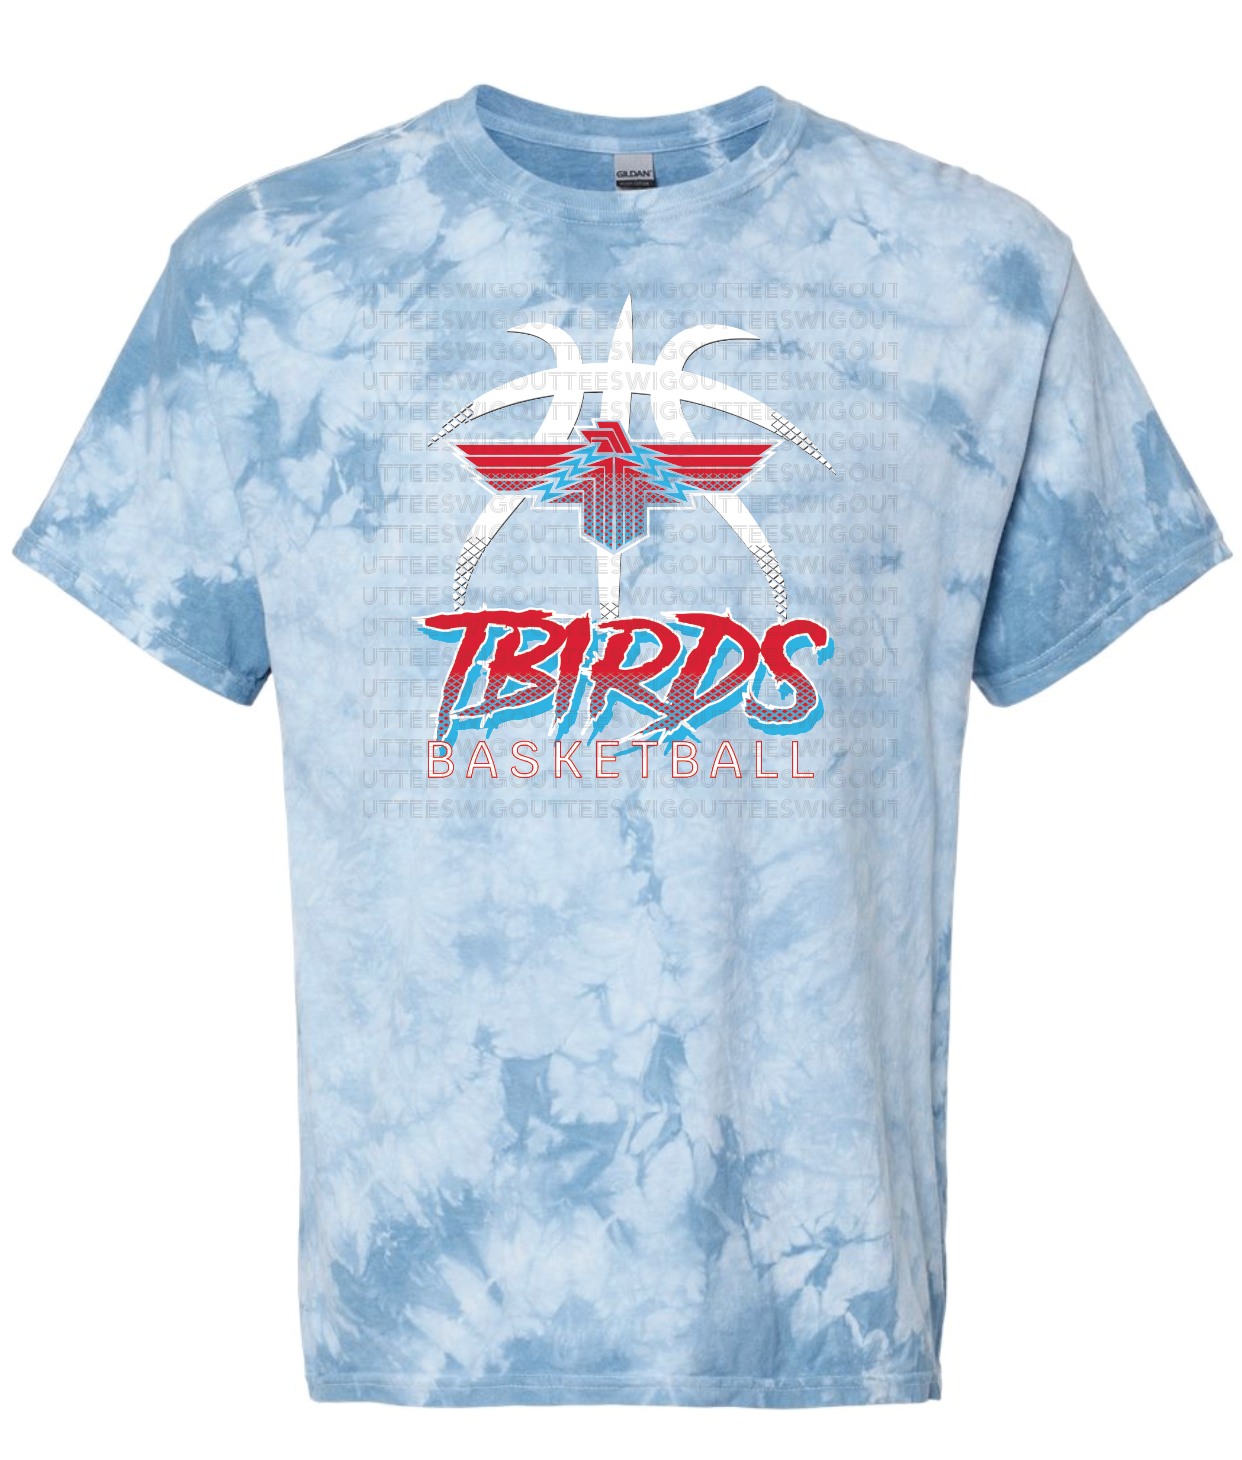 Tbirds Basketball Crystal Tie Dye T-shirt